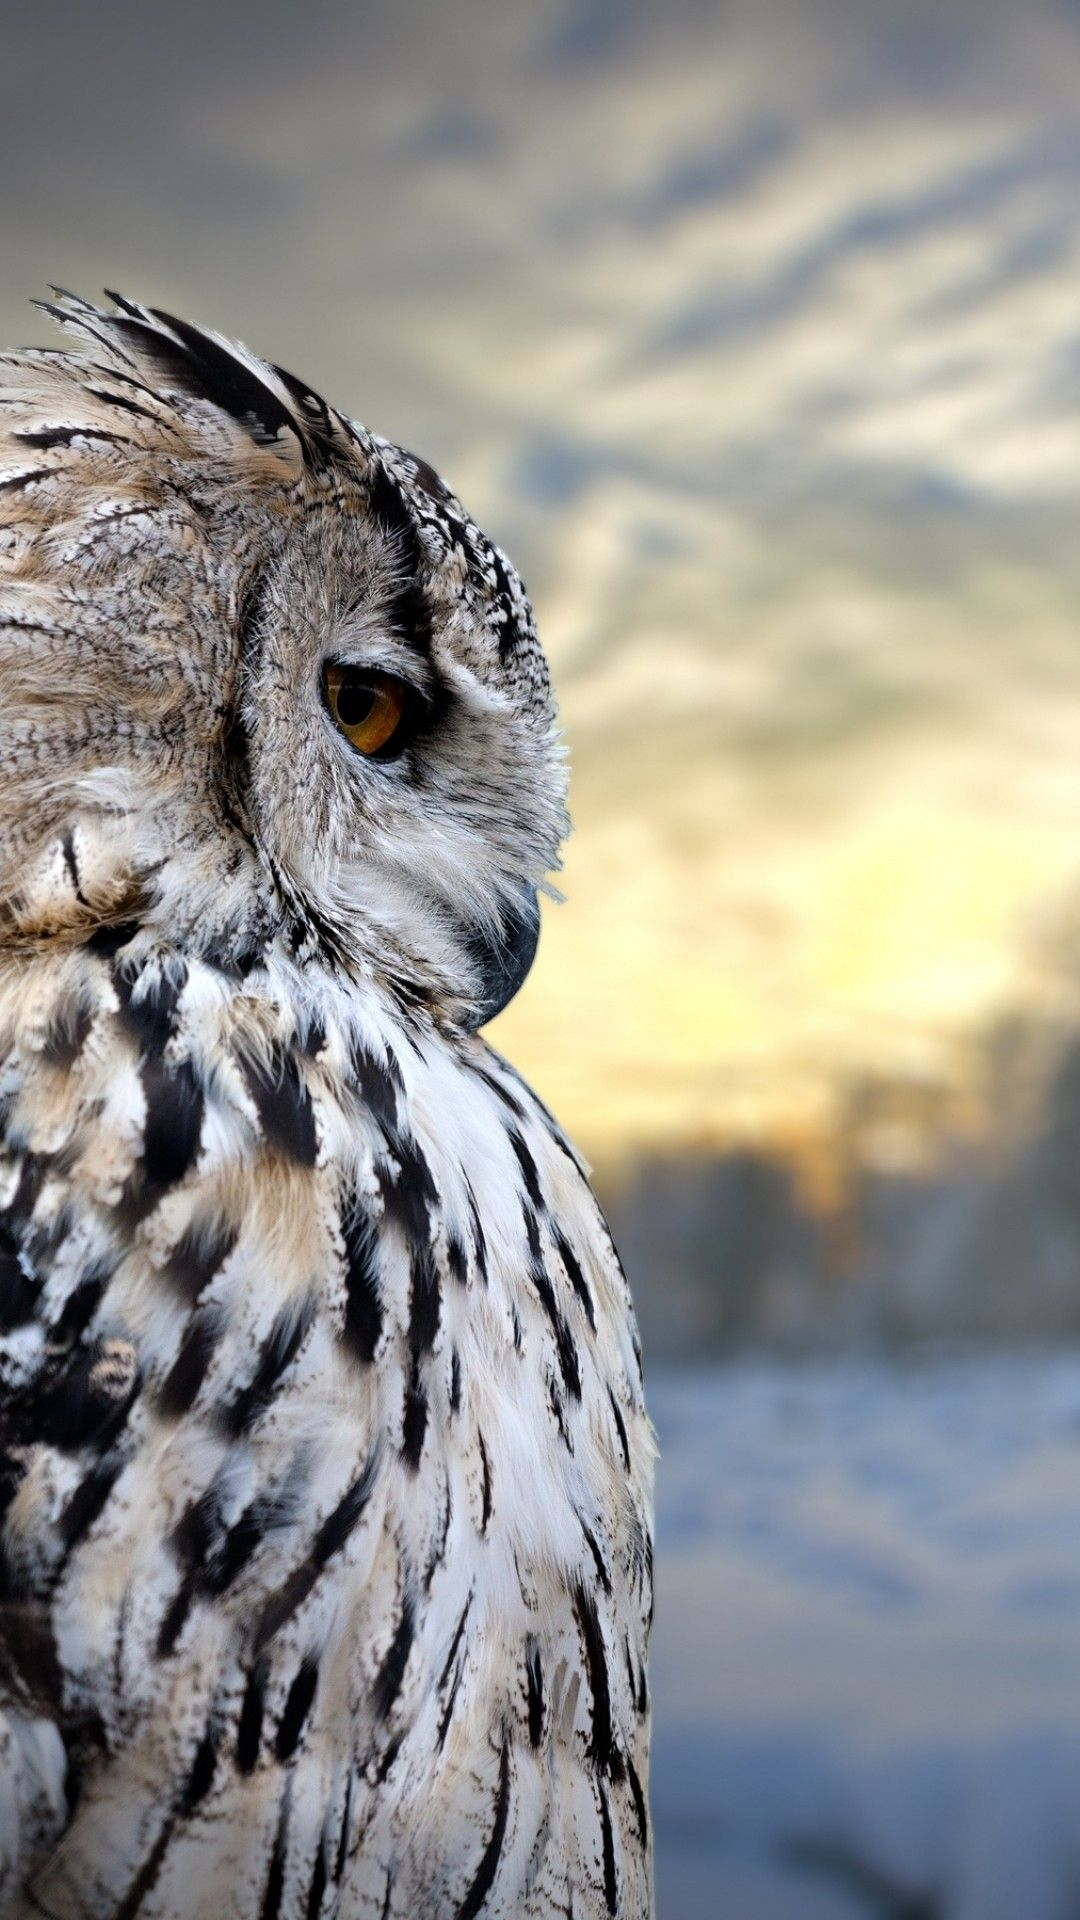 1080x1920 Owl iPhone Wallpapers Top Free Owl iPhone Backgrounds | Owl wallpaper, Pet birds, Cute owls wallpaper